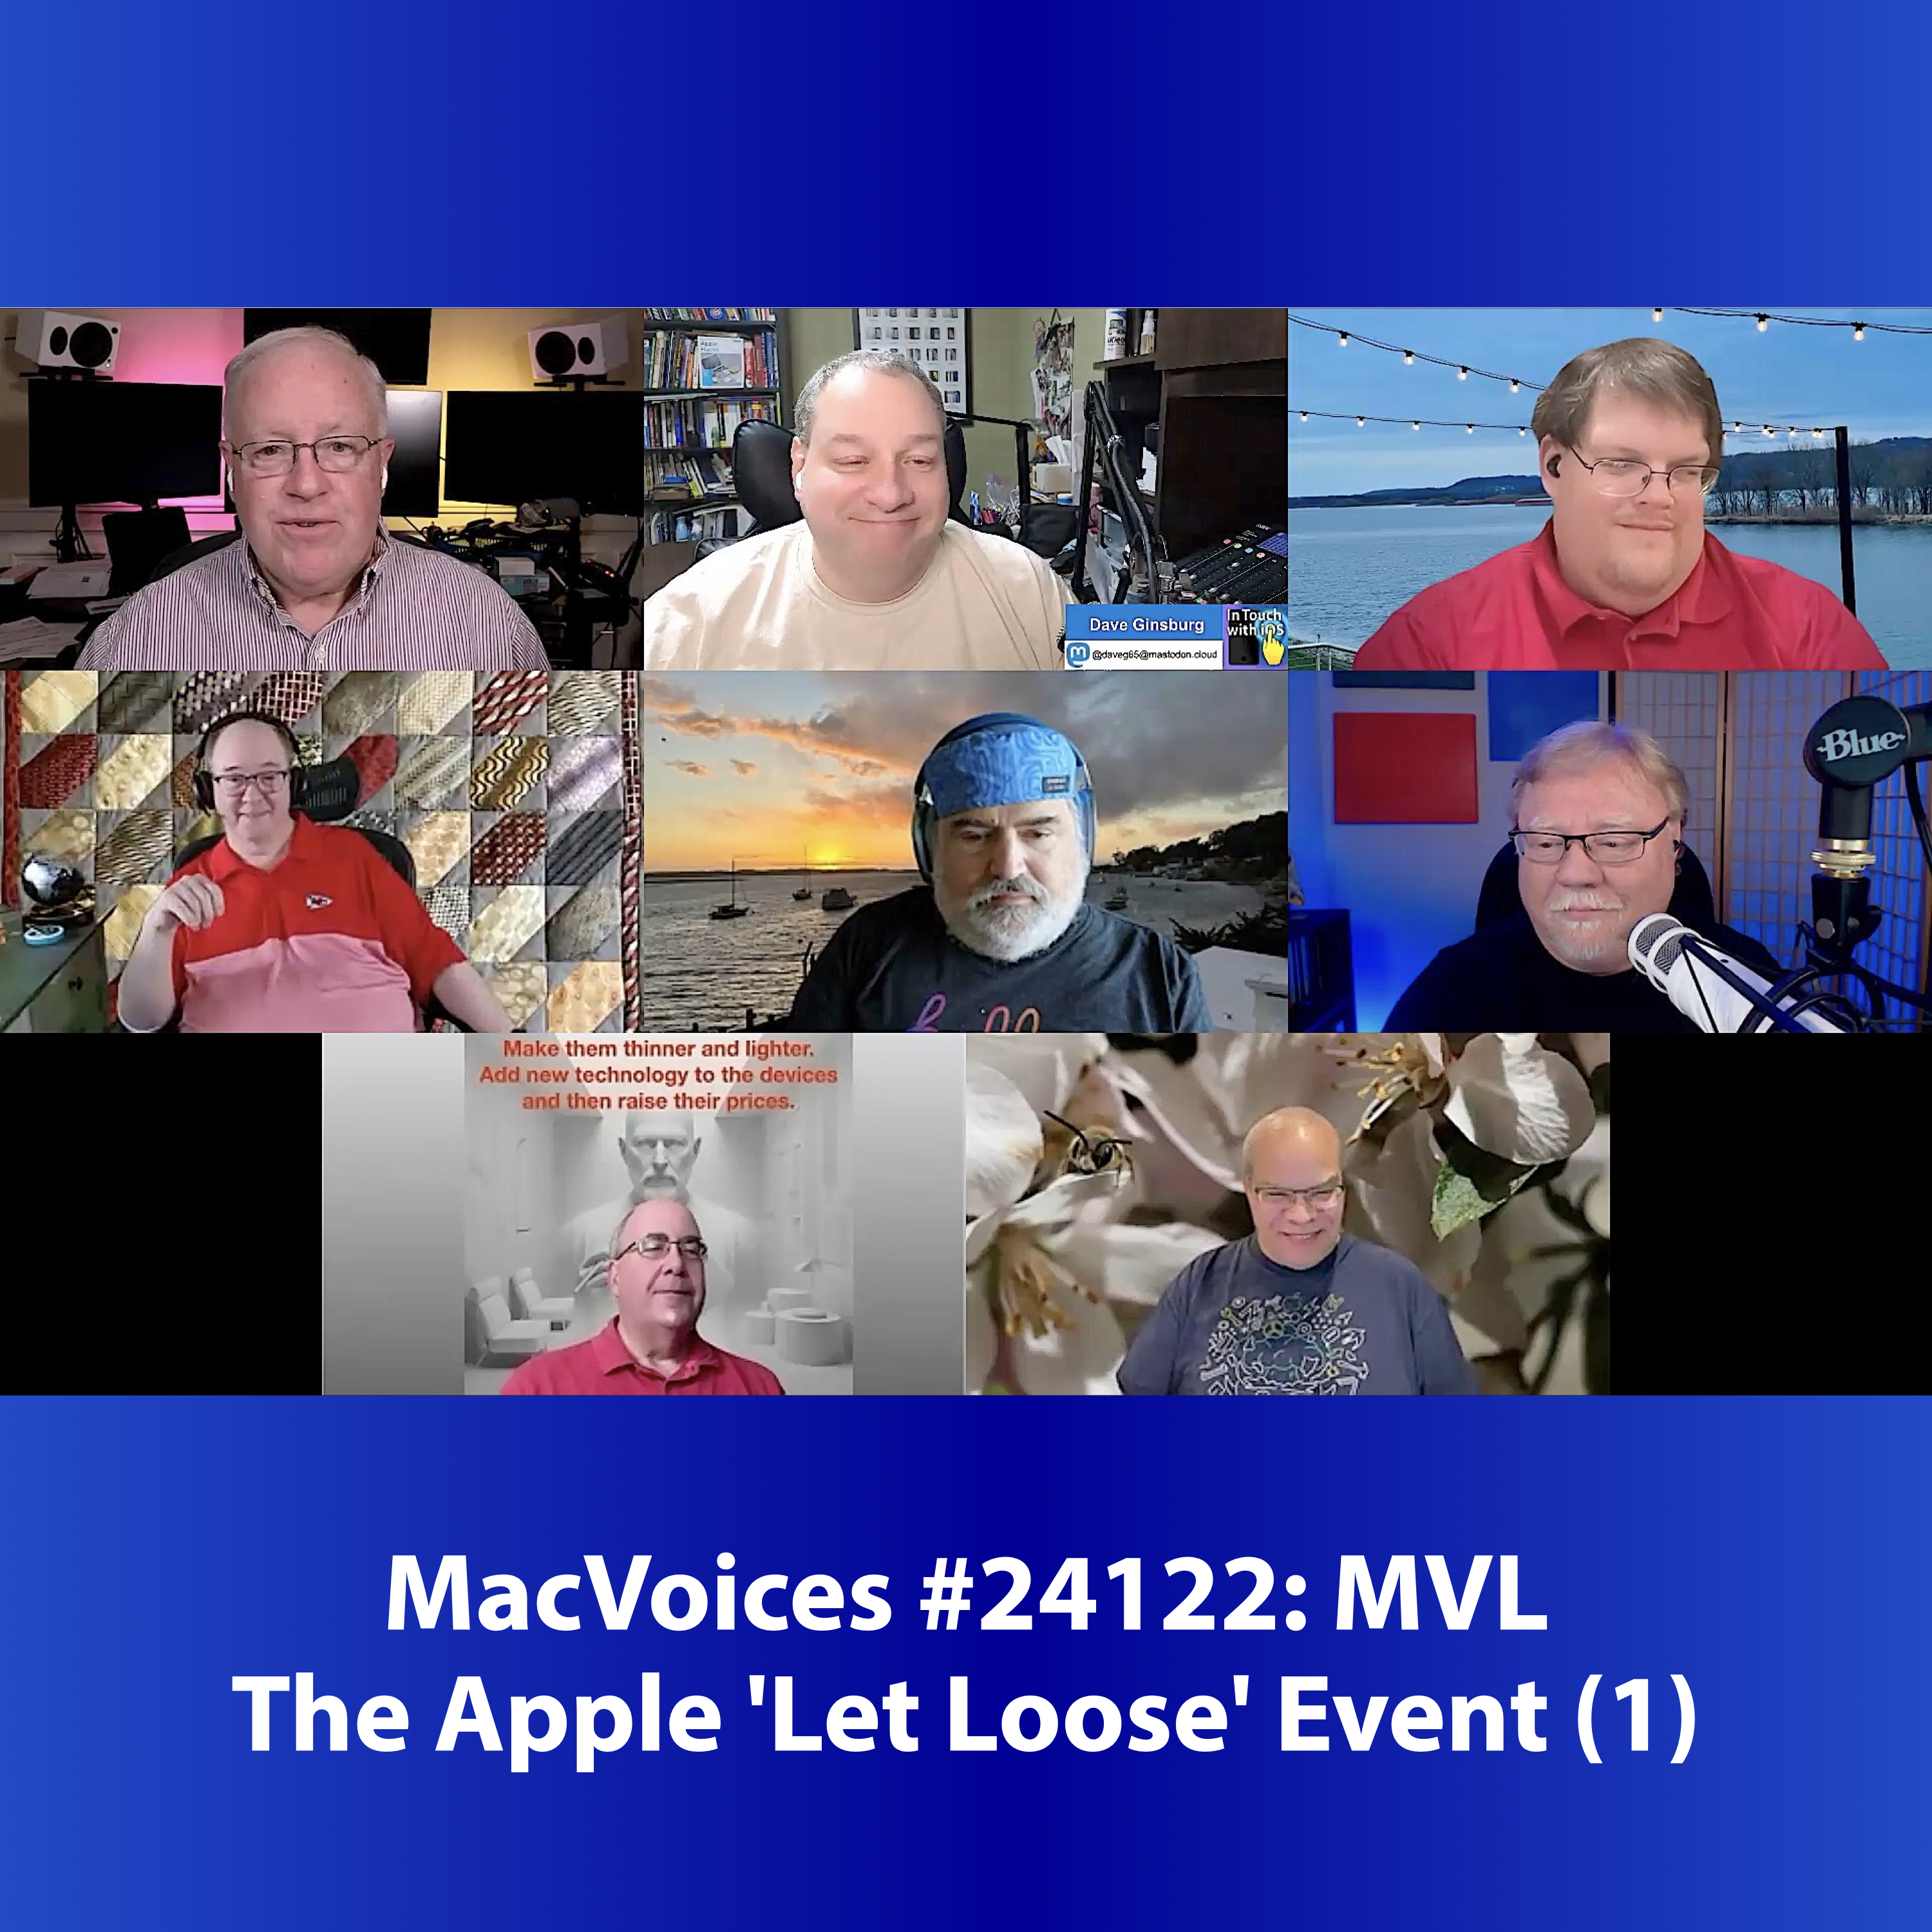 MacVoices #24122: MVL - Apple's 'Let Loose' Event (1)